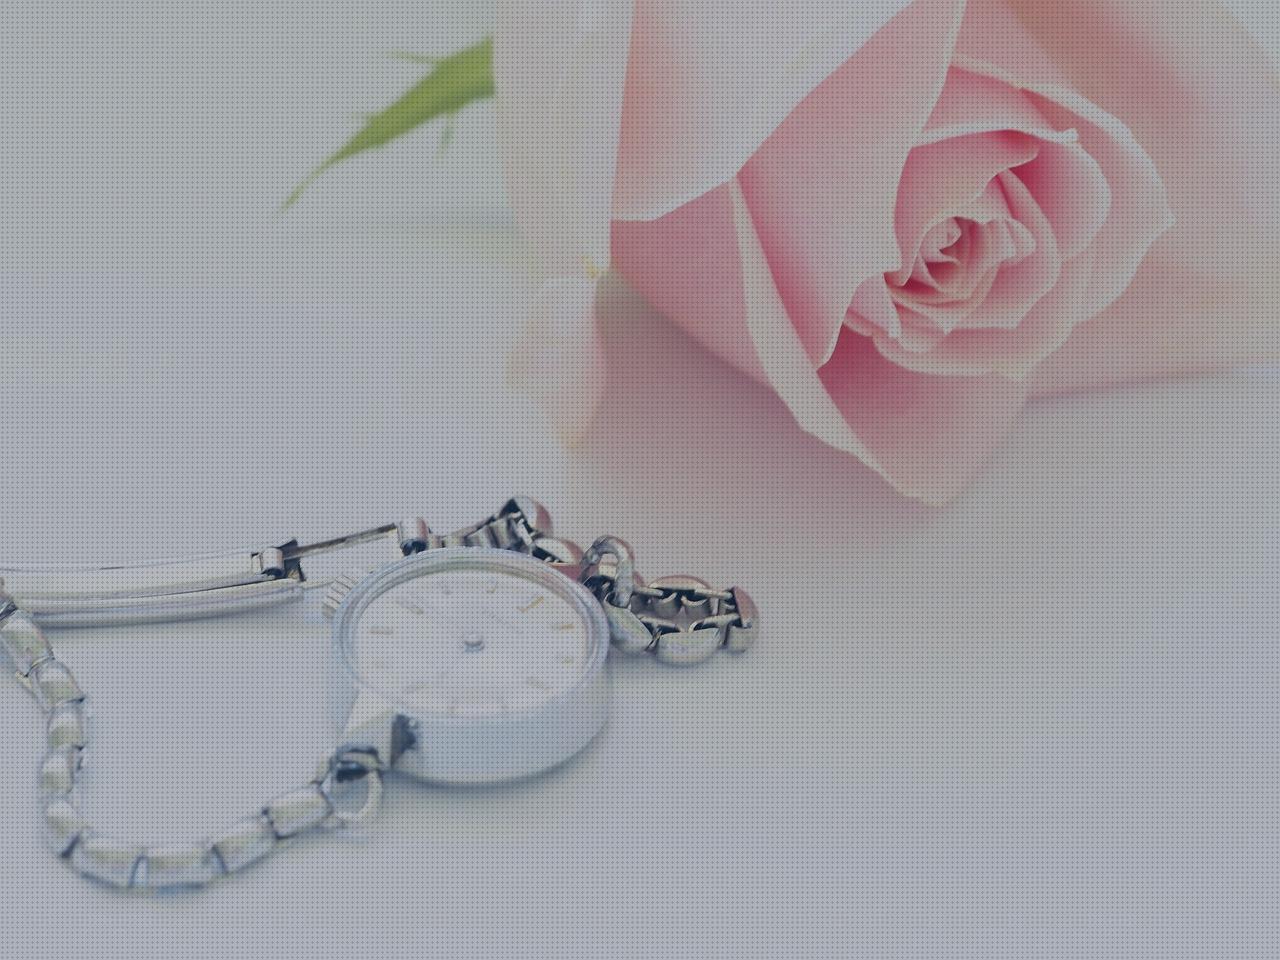 ¿Dónde poder comprar relojes rosas relojes amazon otros colores hb 230 1 34 2718 1148 489 relojes amazon pared reloj rosa mujer?